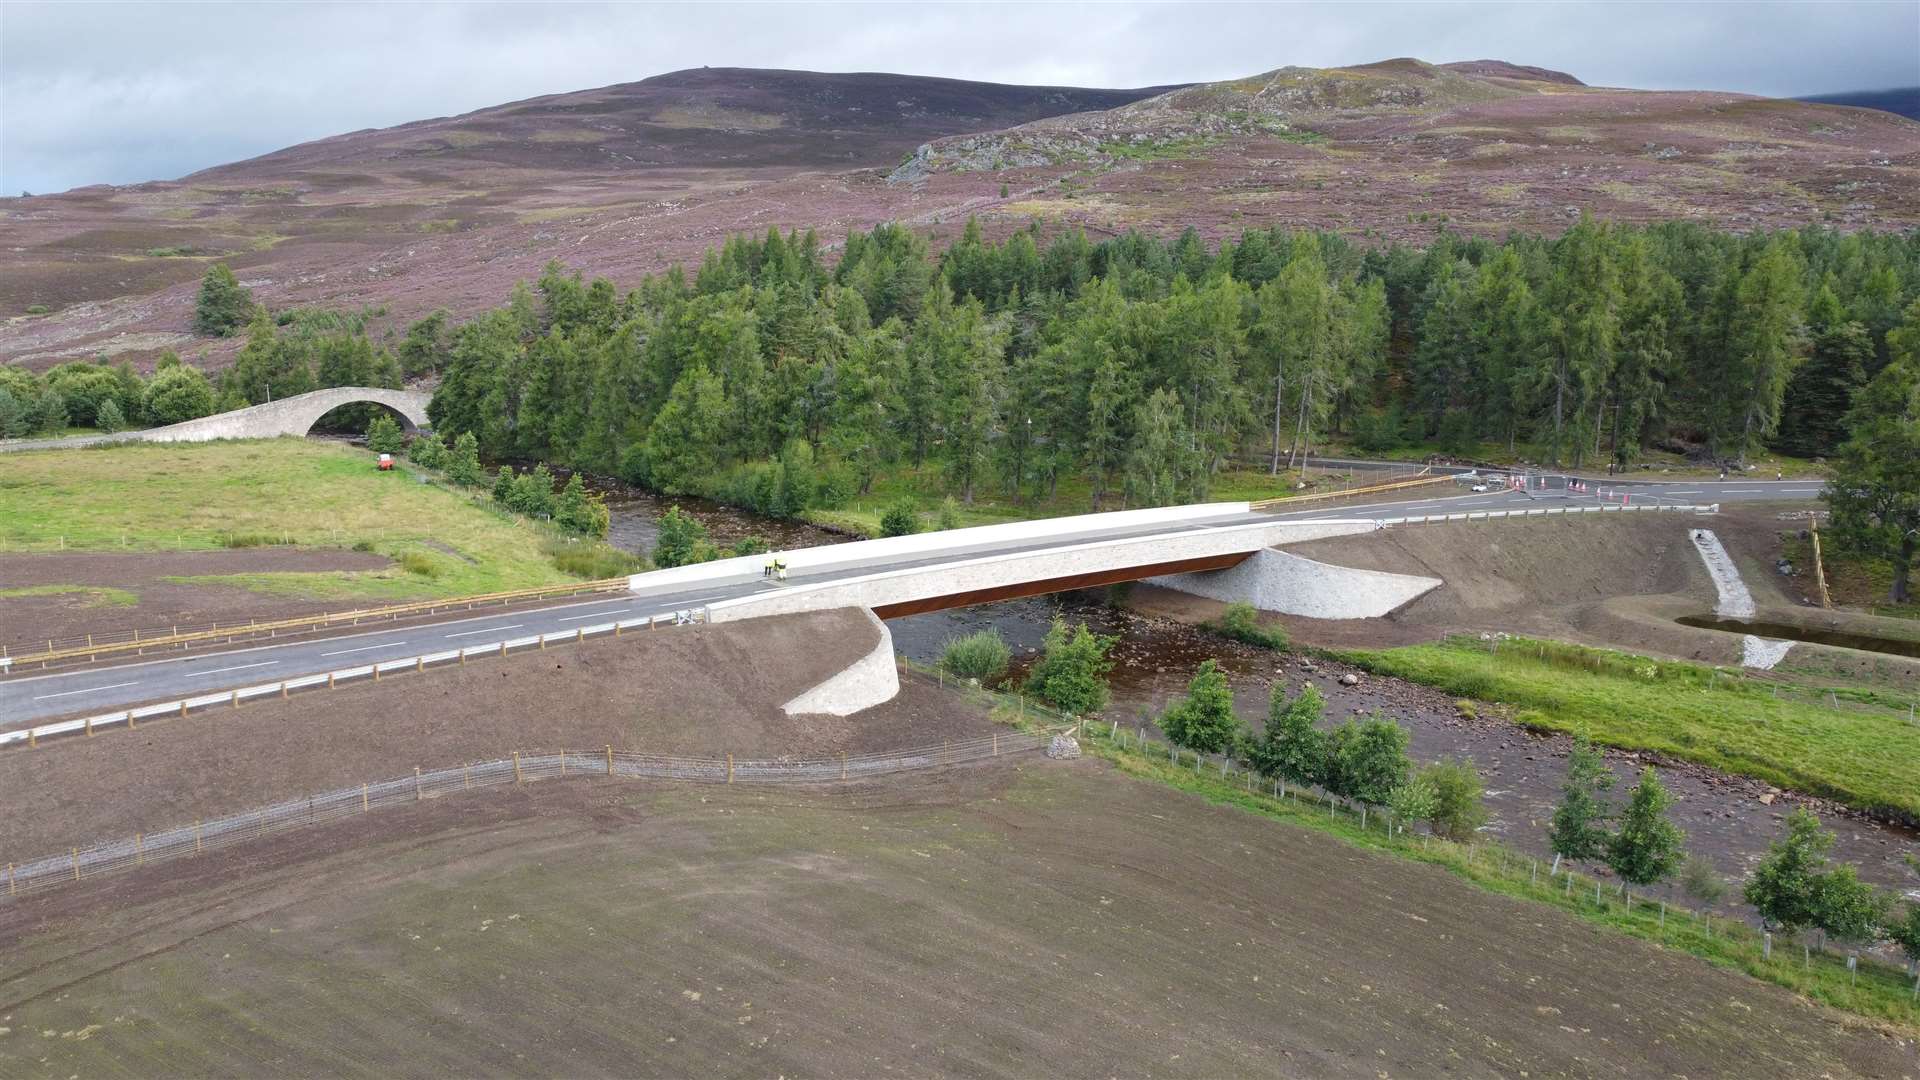 The new bridge at Gairnshiel opened to traffic last year.